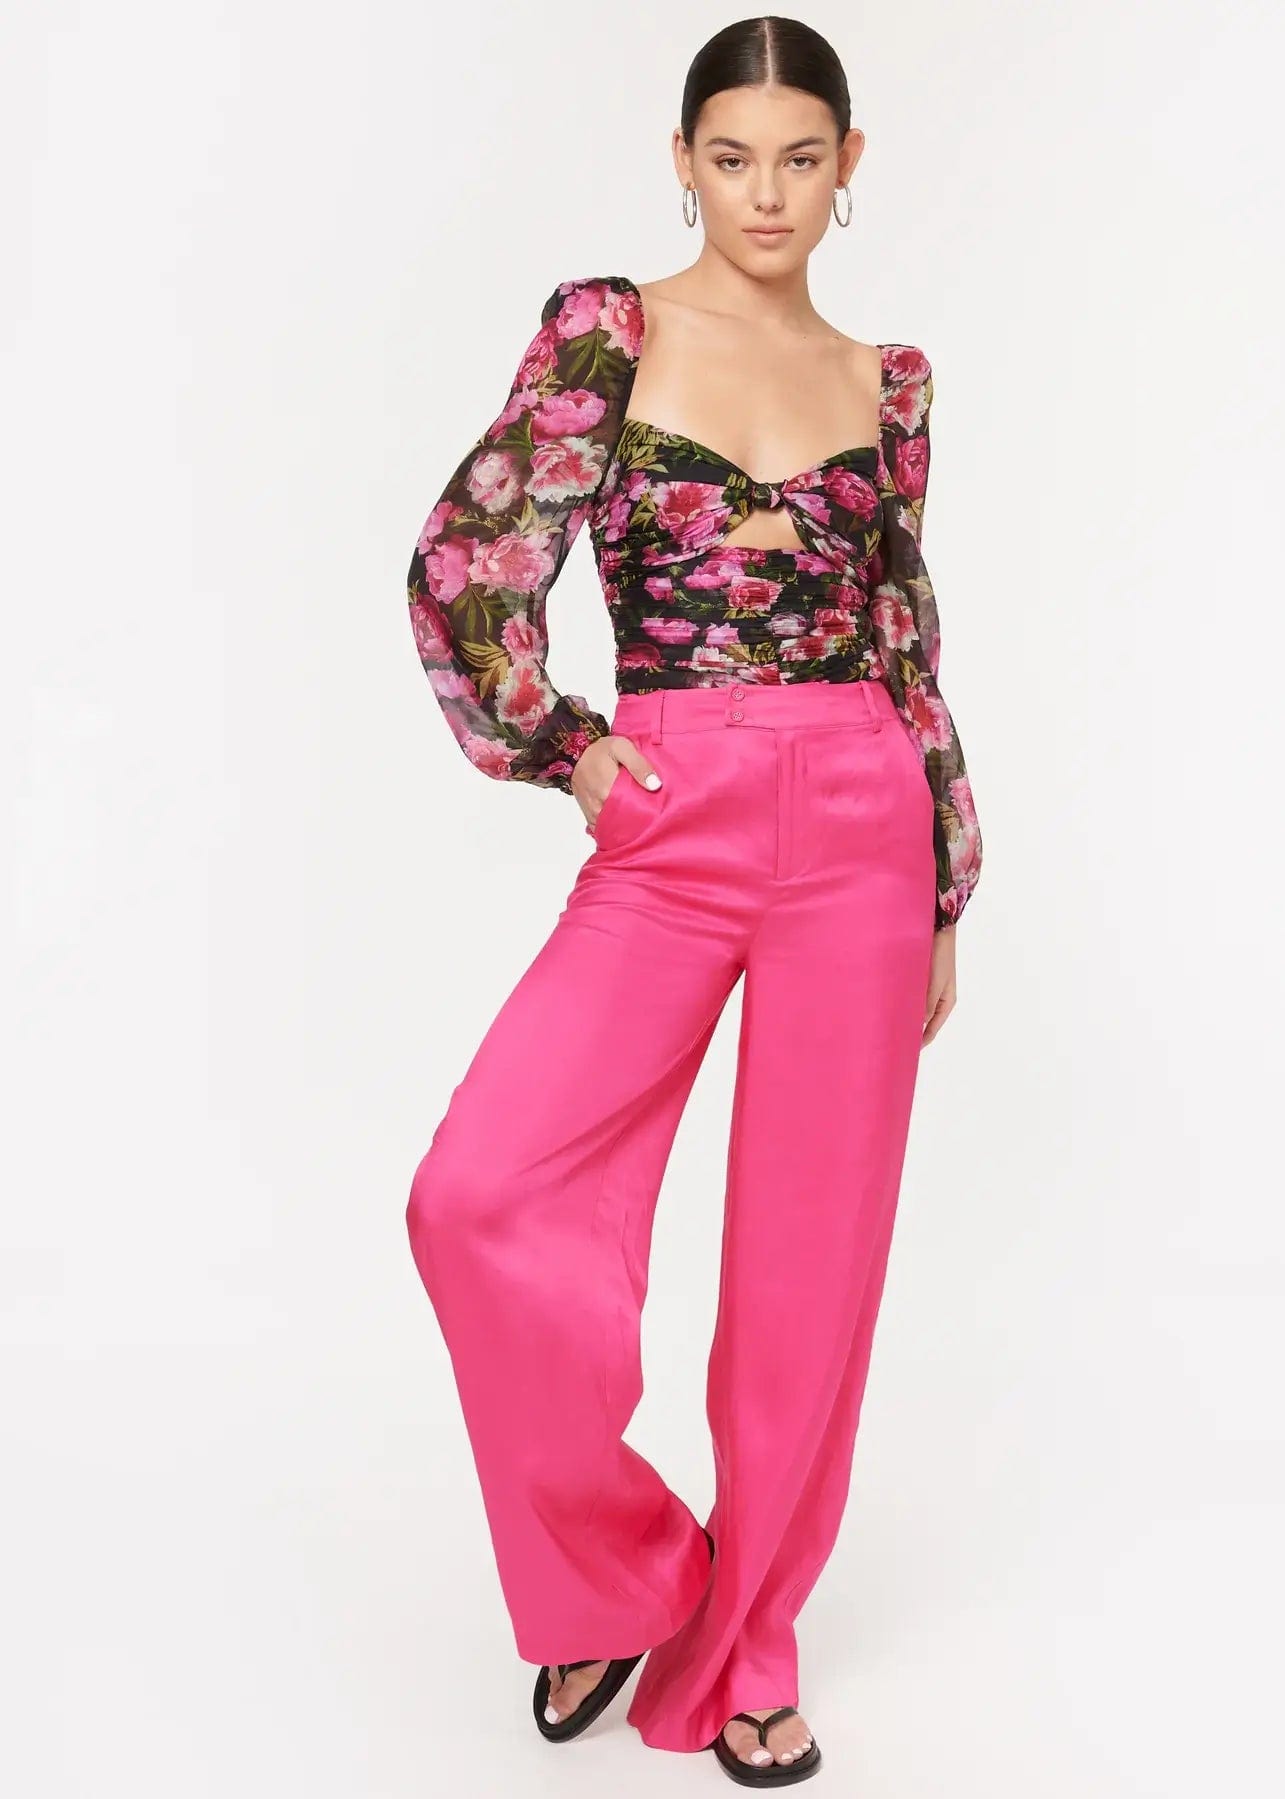 CAMI NYC - Kimmy Bodysuit in Plum Blossom – Basicality